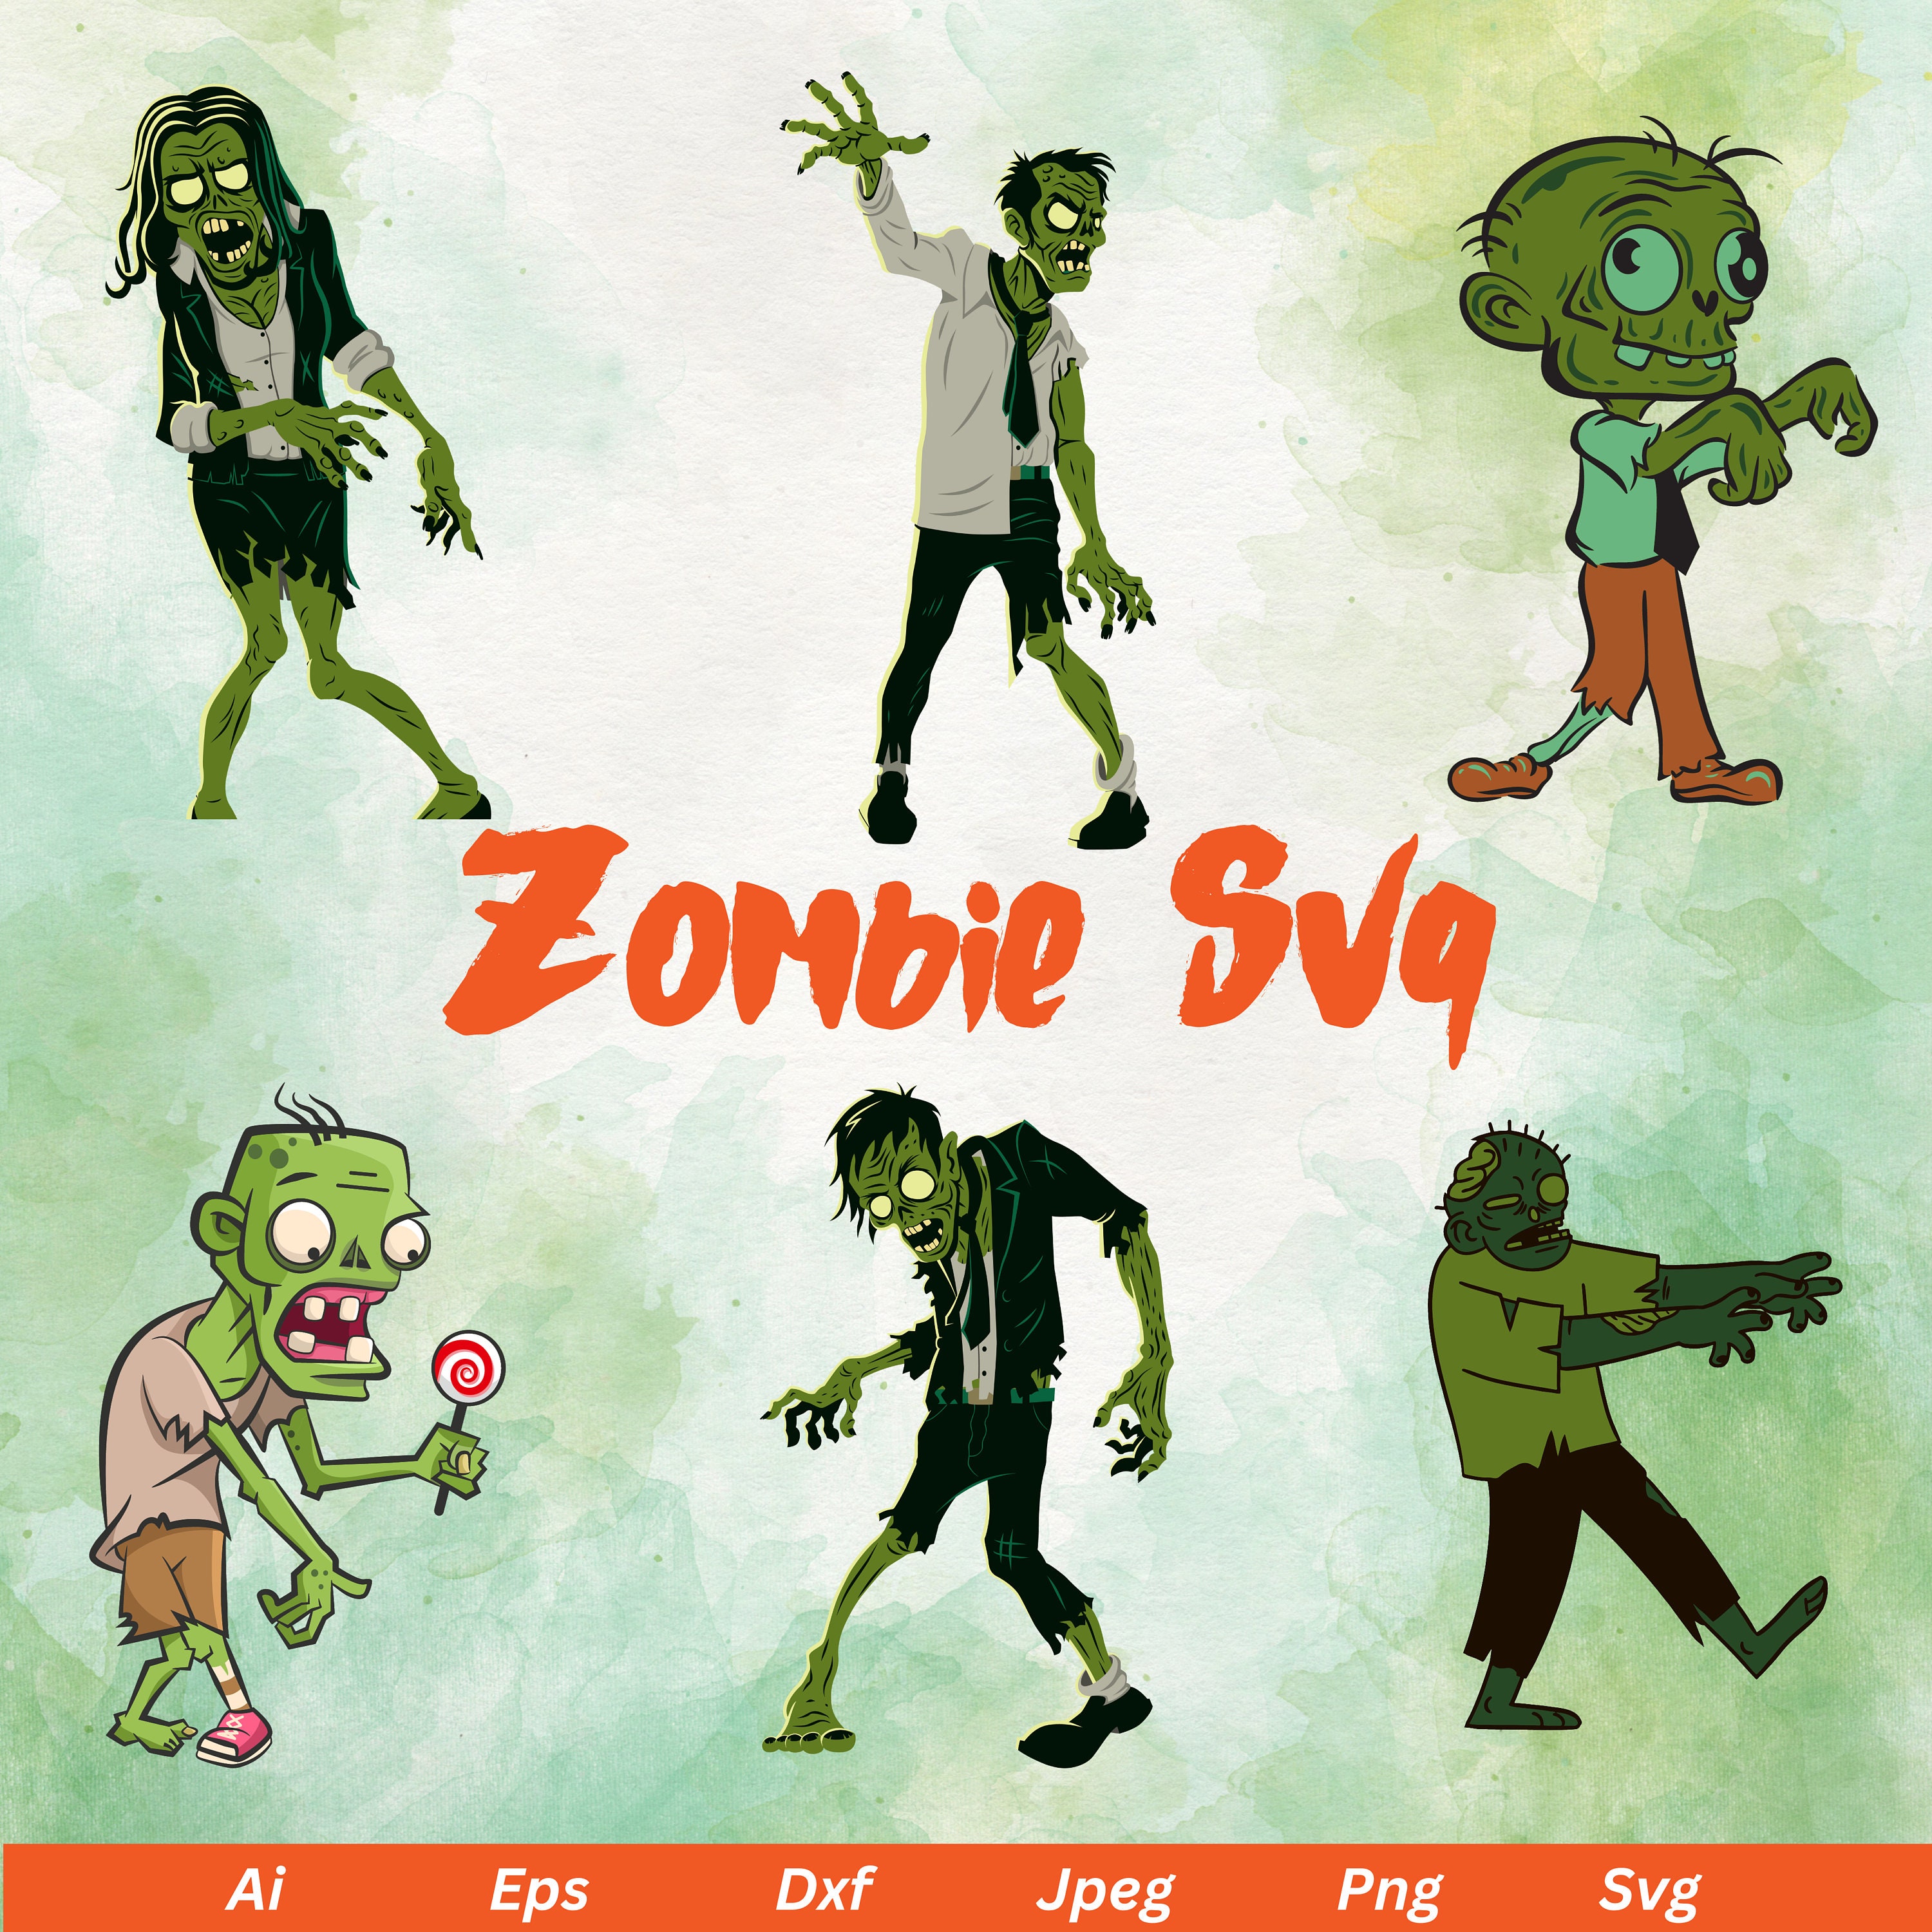 Ghoul Clipart Zombie - Plants Vs Zombies Png, Transparent Png